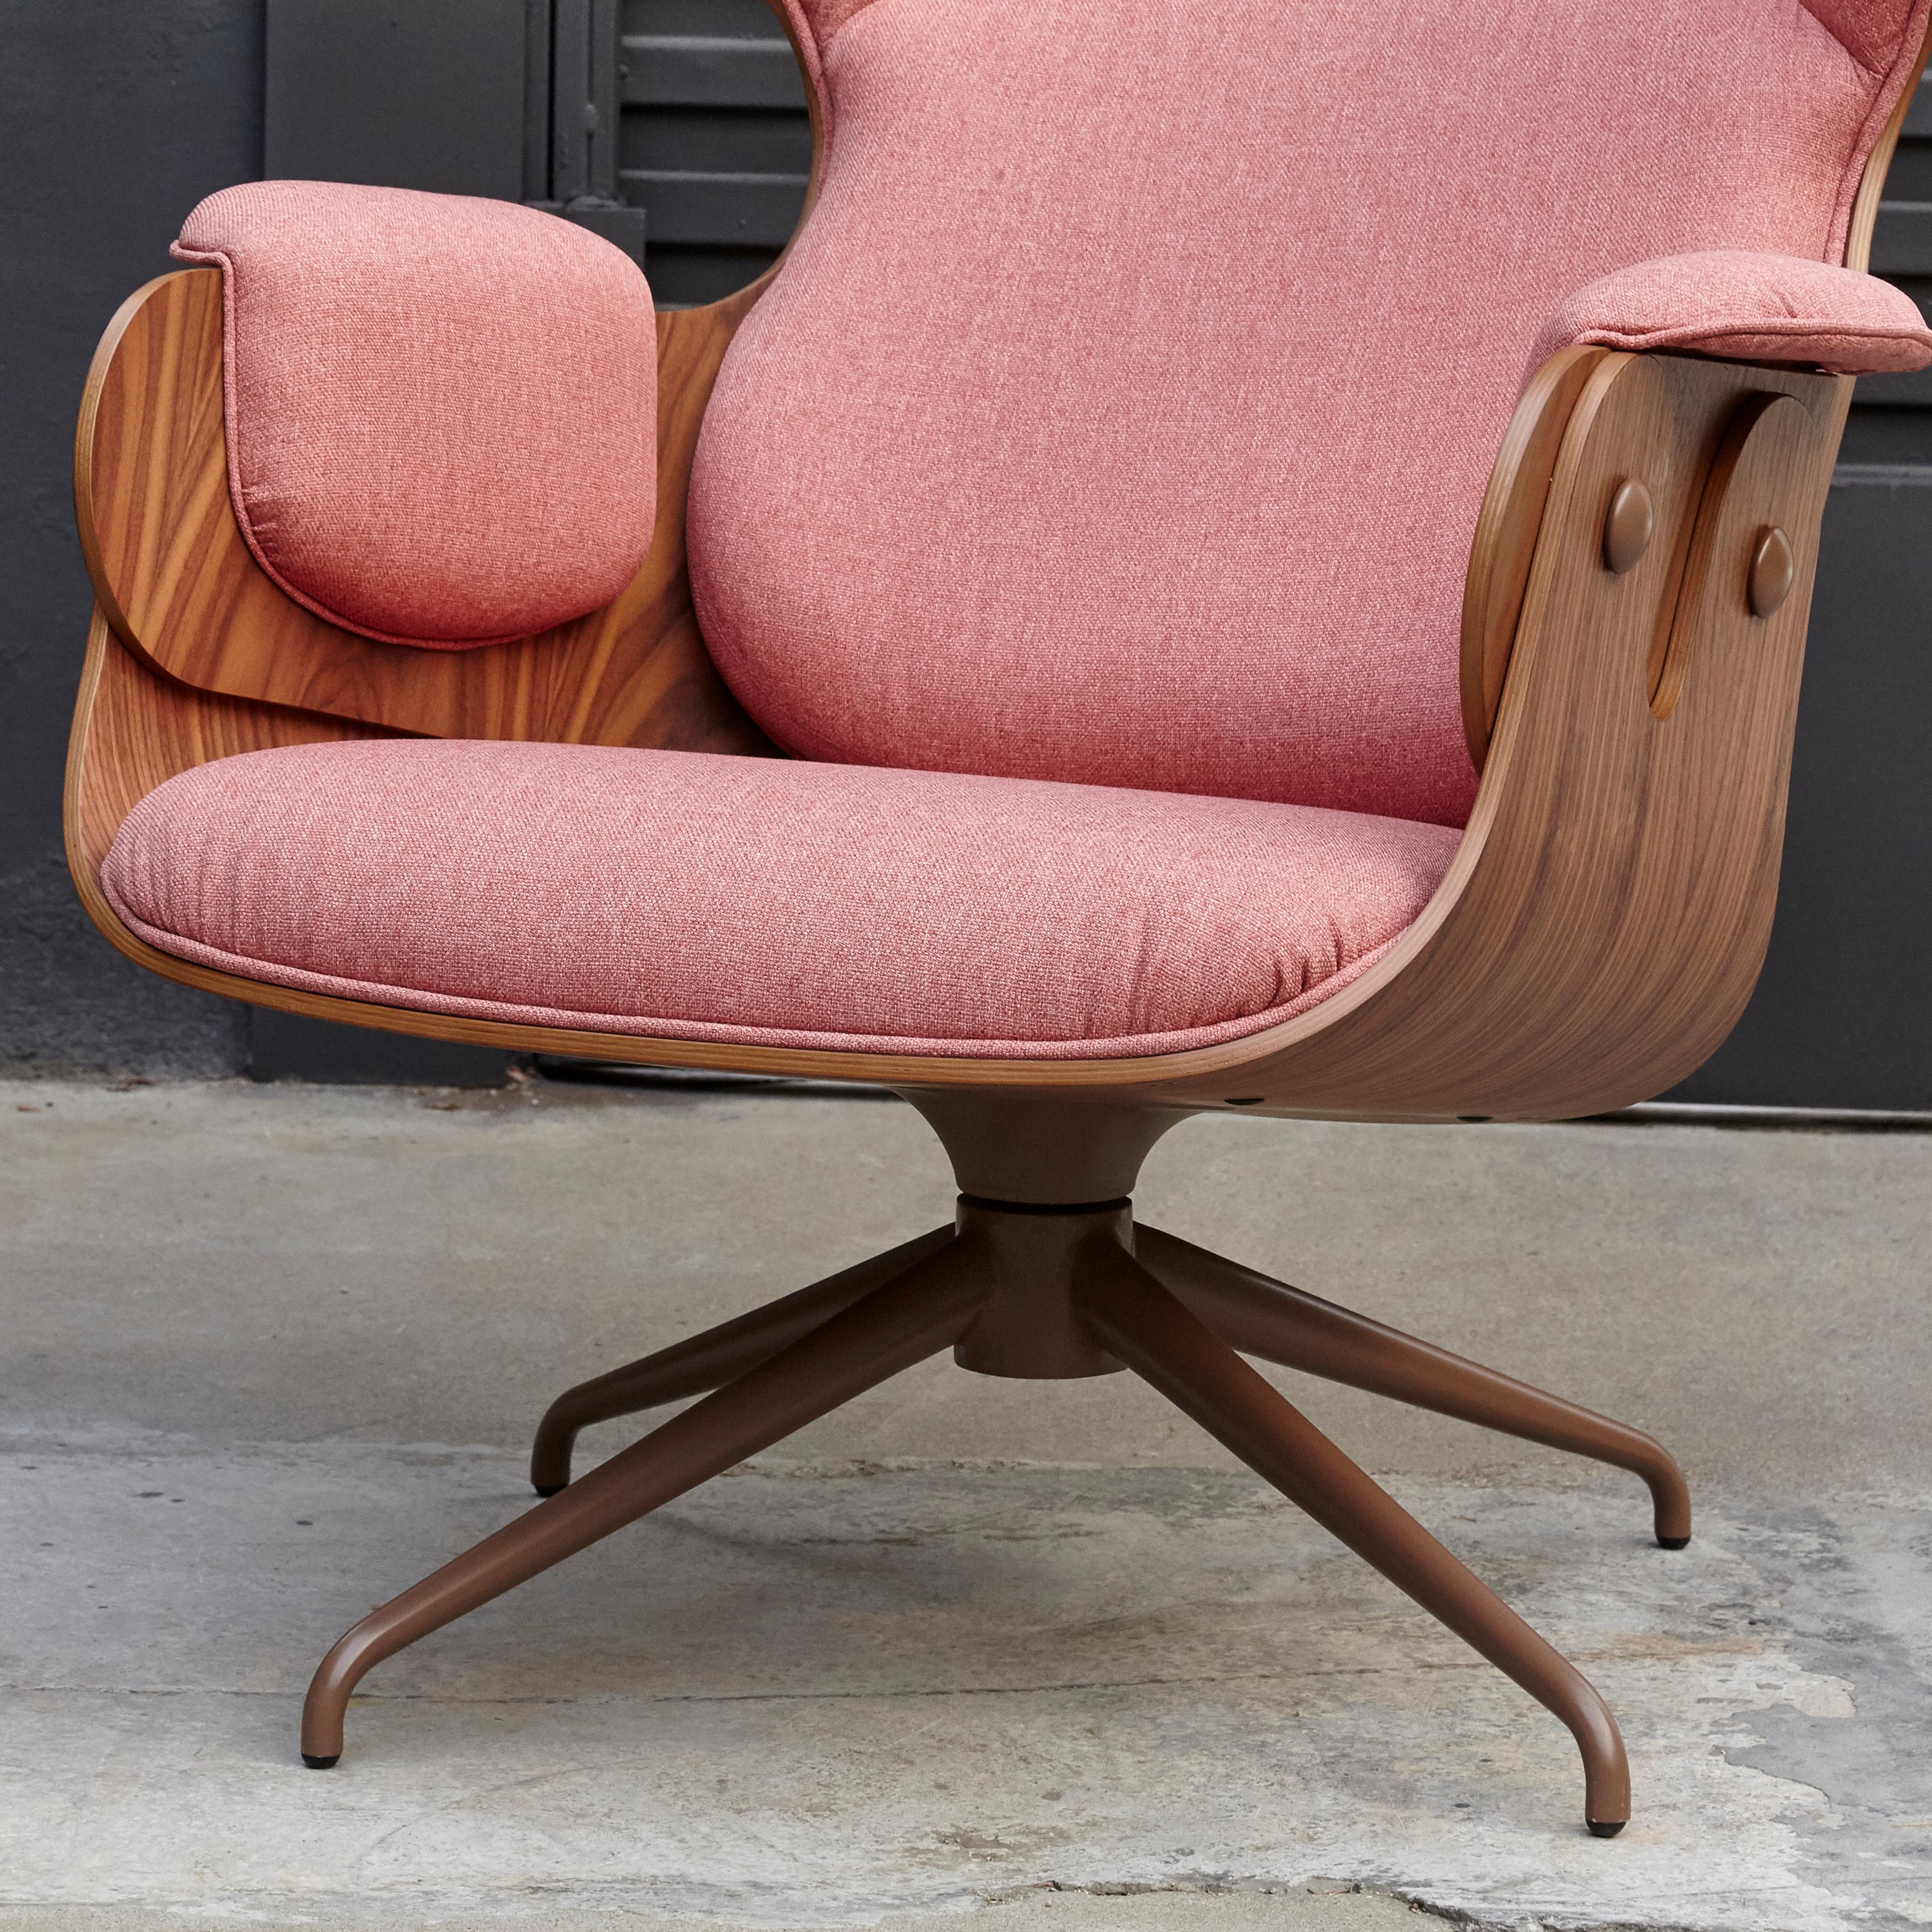 Jaime Hayon, Contemporary, Playwood Walnut Pink Upholstery Lounger Armchair 1